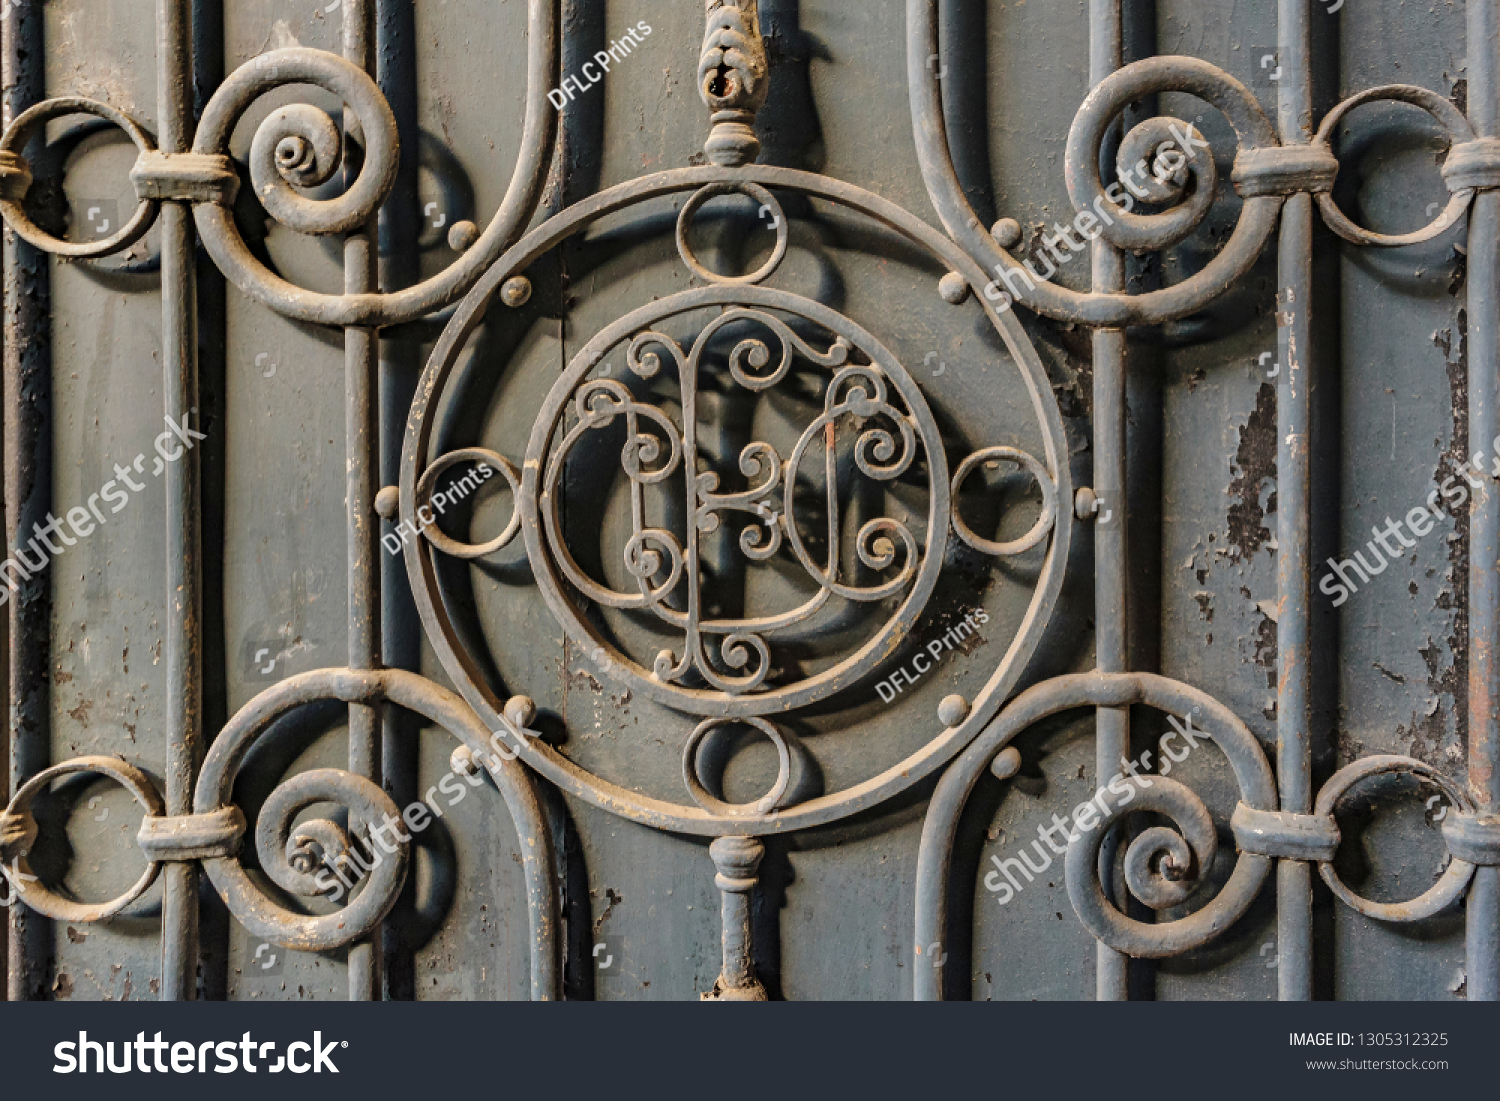 Iron ornate door detail background photo #1305312325